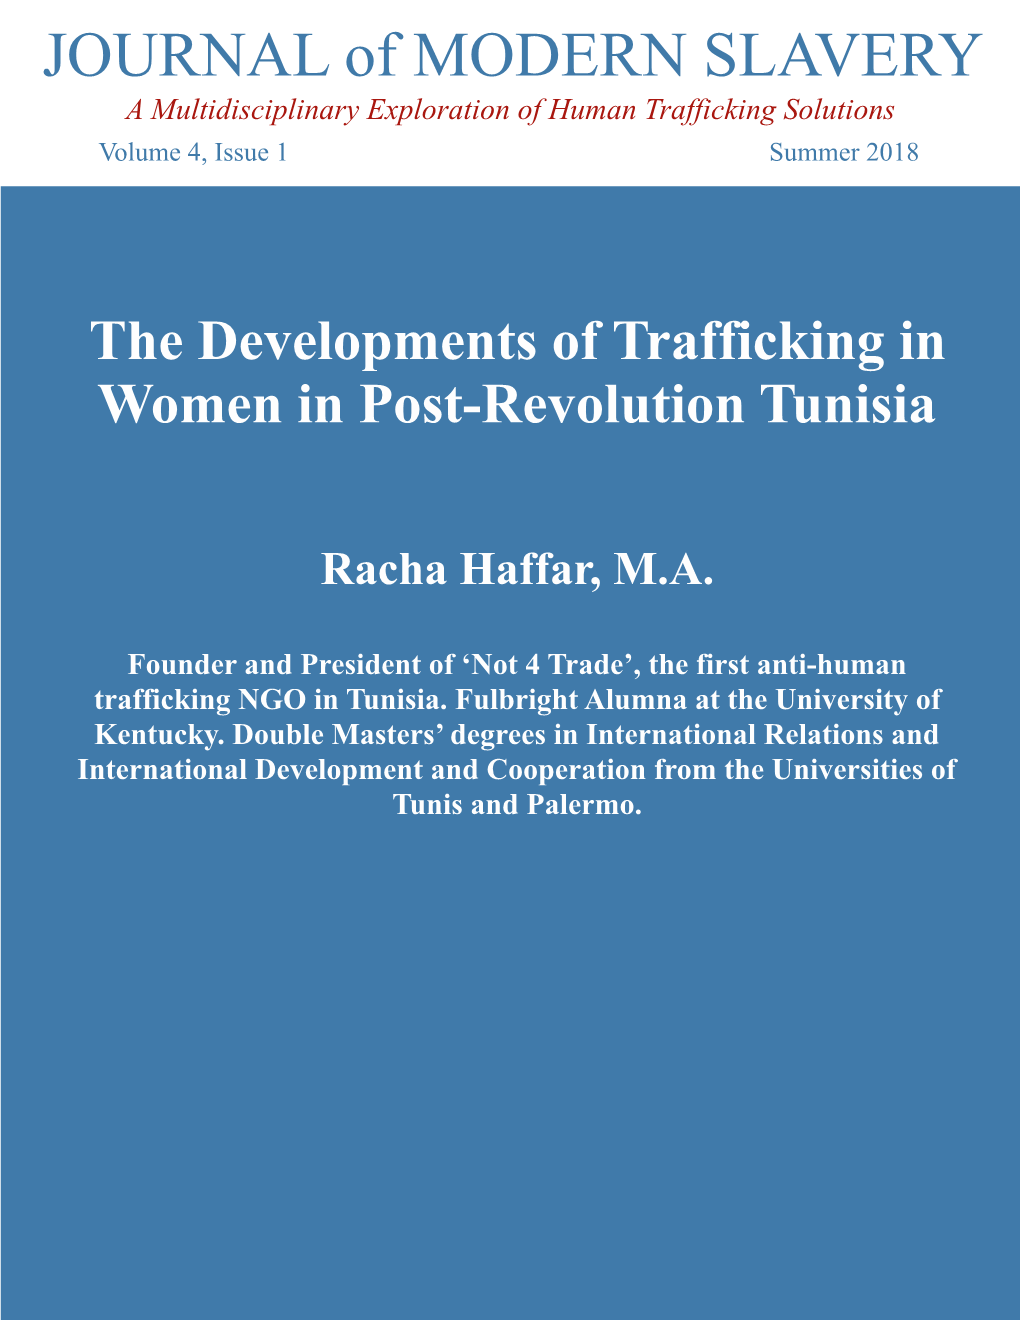 The Developments of Trafficking in Women in Post-Revolution Tunisia